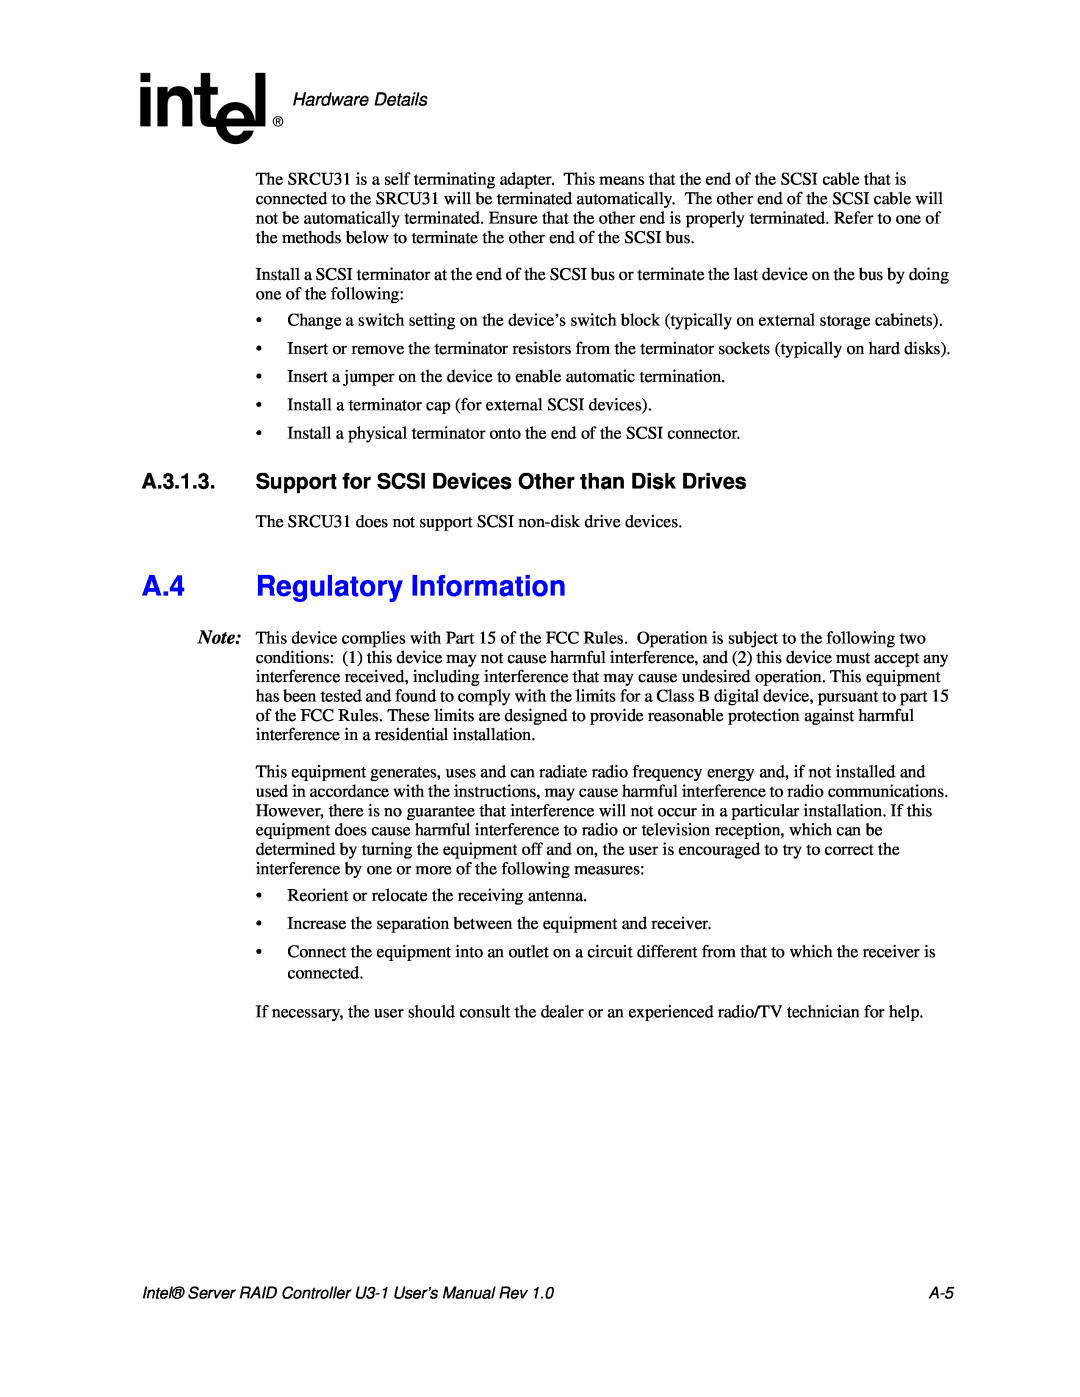 Intel SRCU31 user manual A.4 Regulatory Information, Hardware Details 